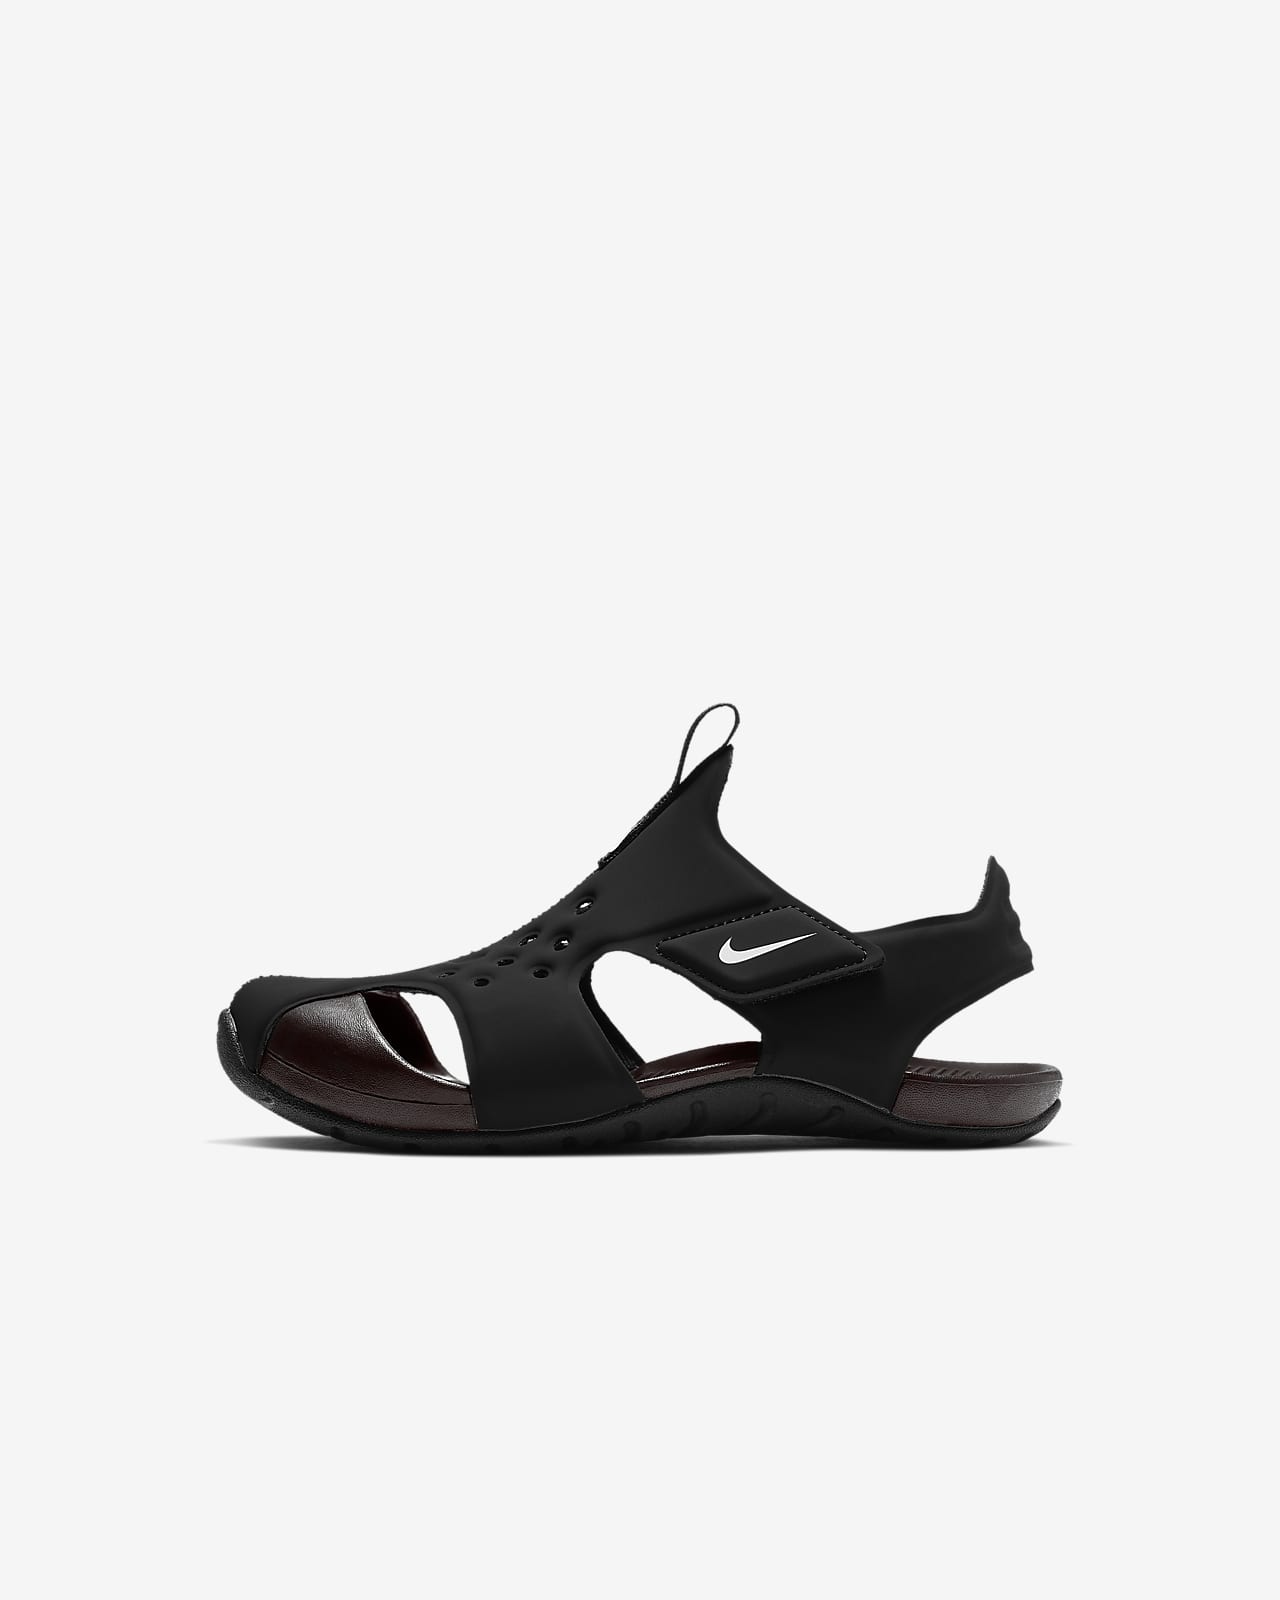 Ervaren persoon Caroline Kolibrie Nike Sunray Protect 2 Sandalen voor kleuters. Nike NL